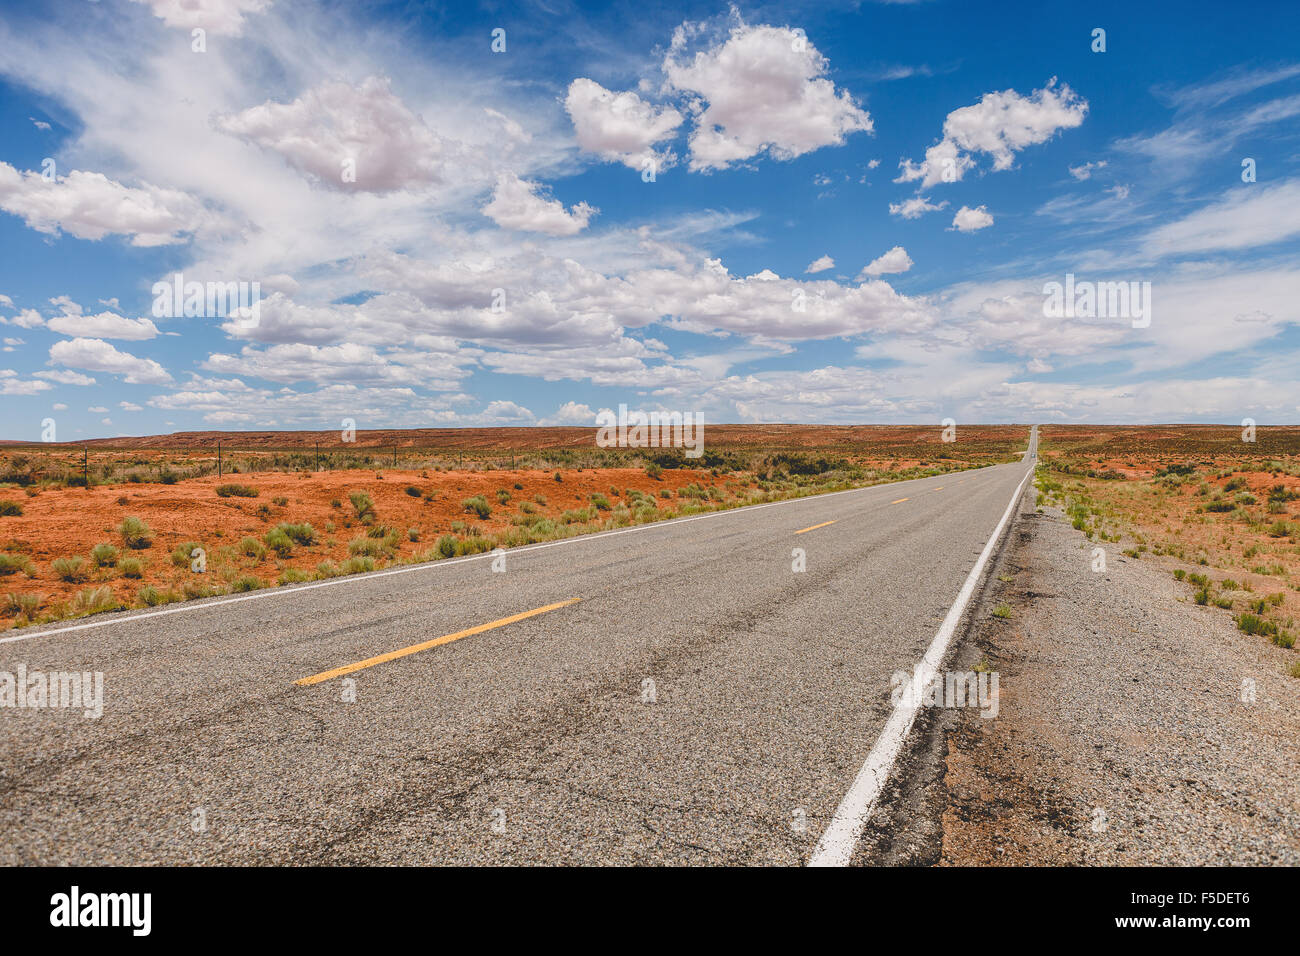 The road near Monument Valley Navajo Tribal Park, Utah (near the Utah/Arizona border), United States of America. Stock Photo